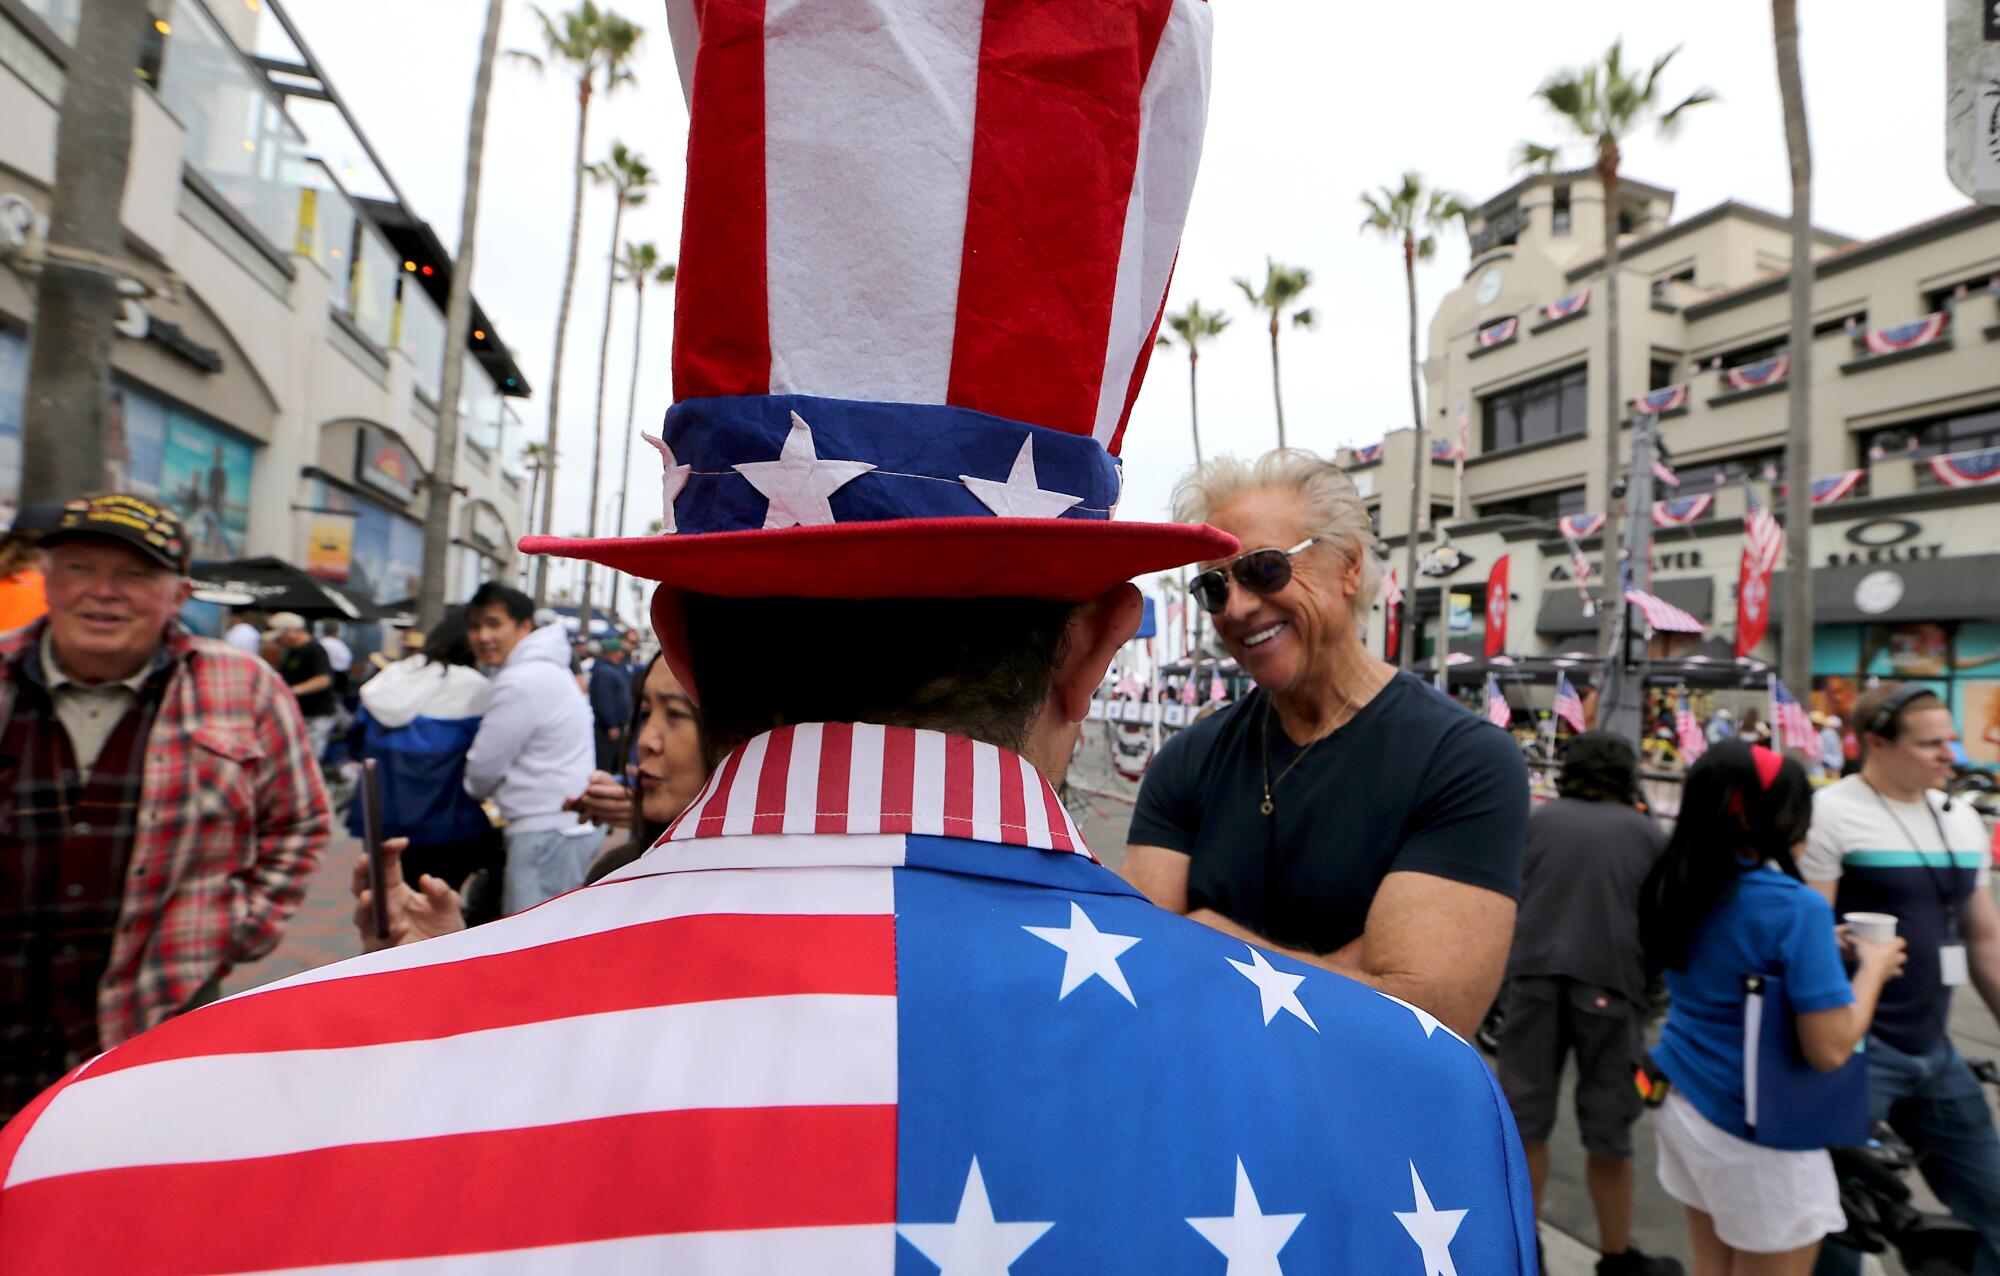 Geham Izmirian dressed as Uncle Sam in a crowd of people